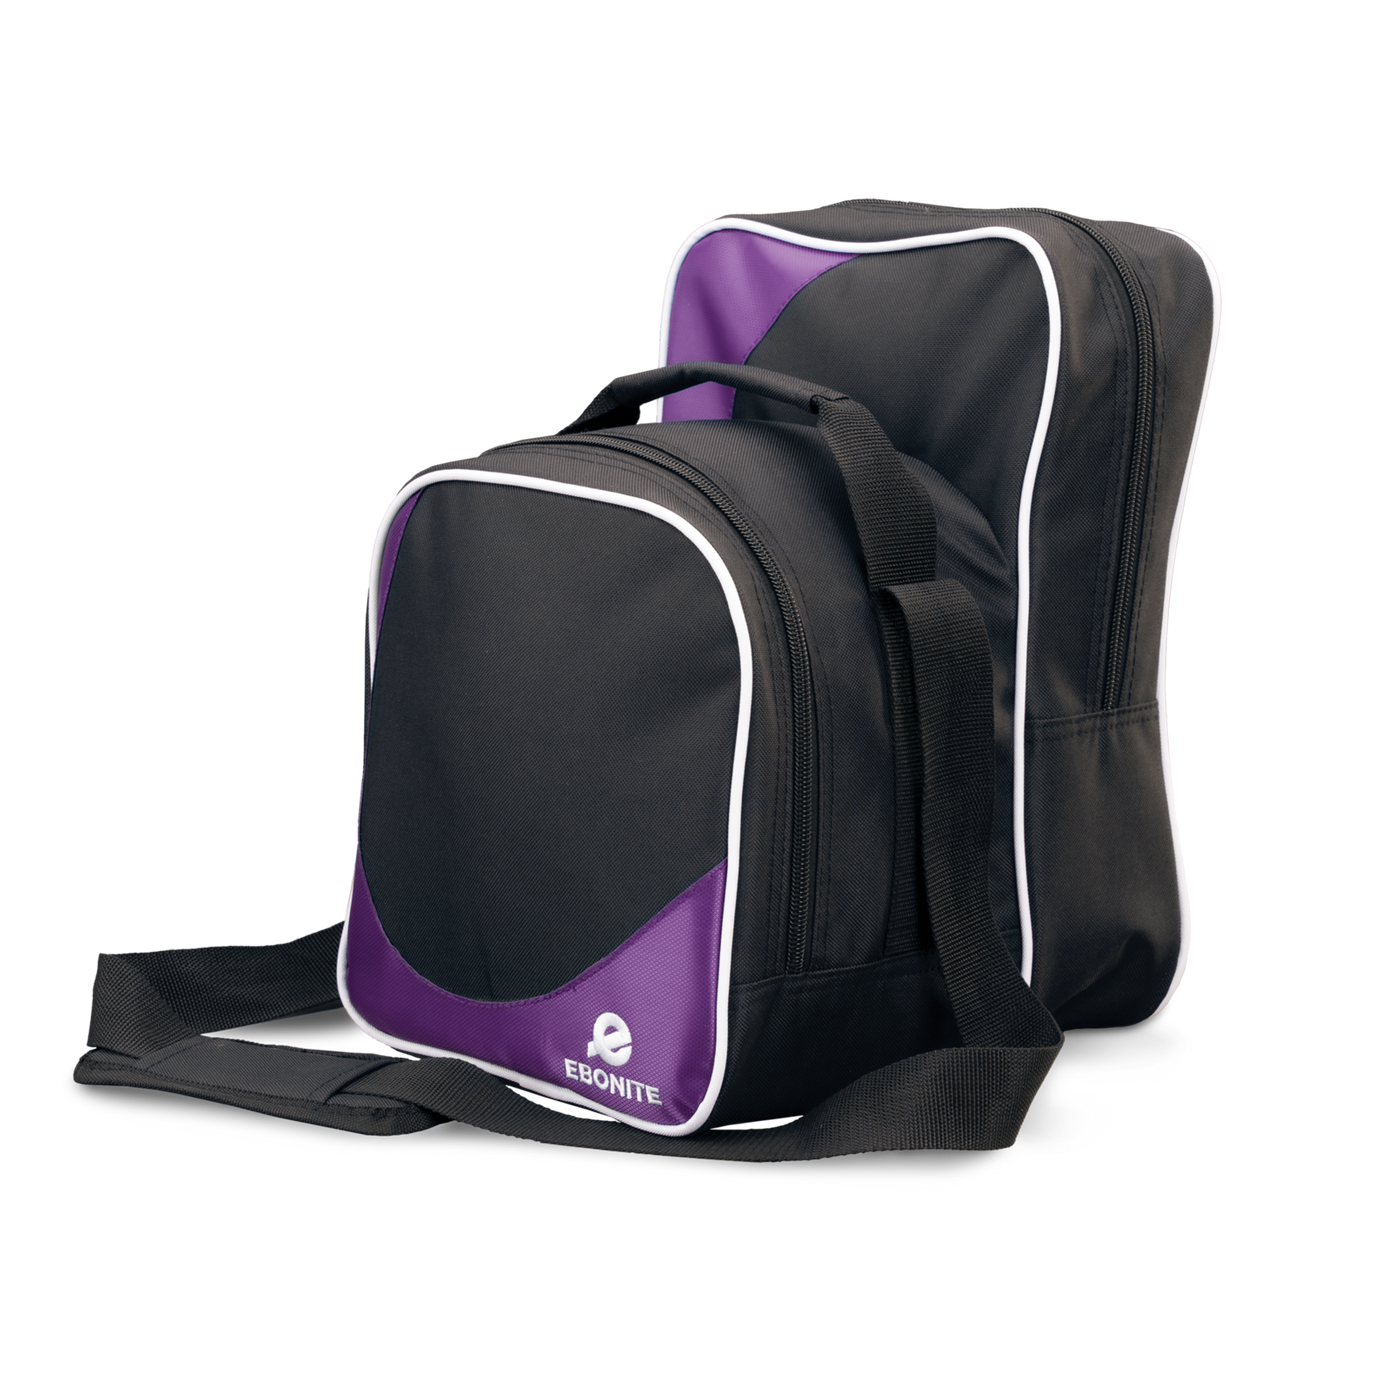 Ebonite Compact Shoulder Bag in Purple